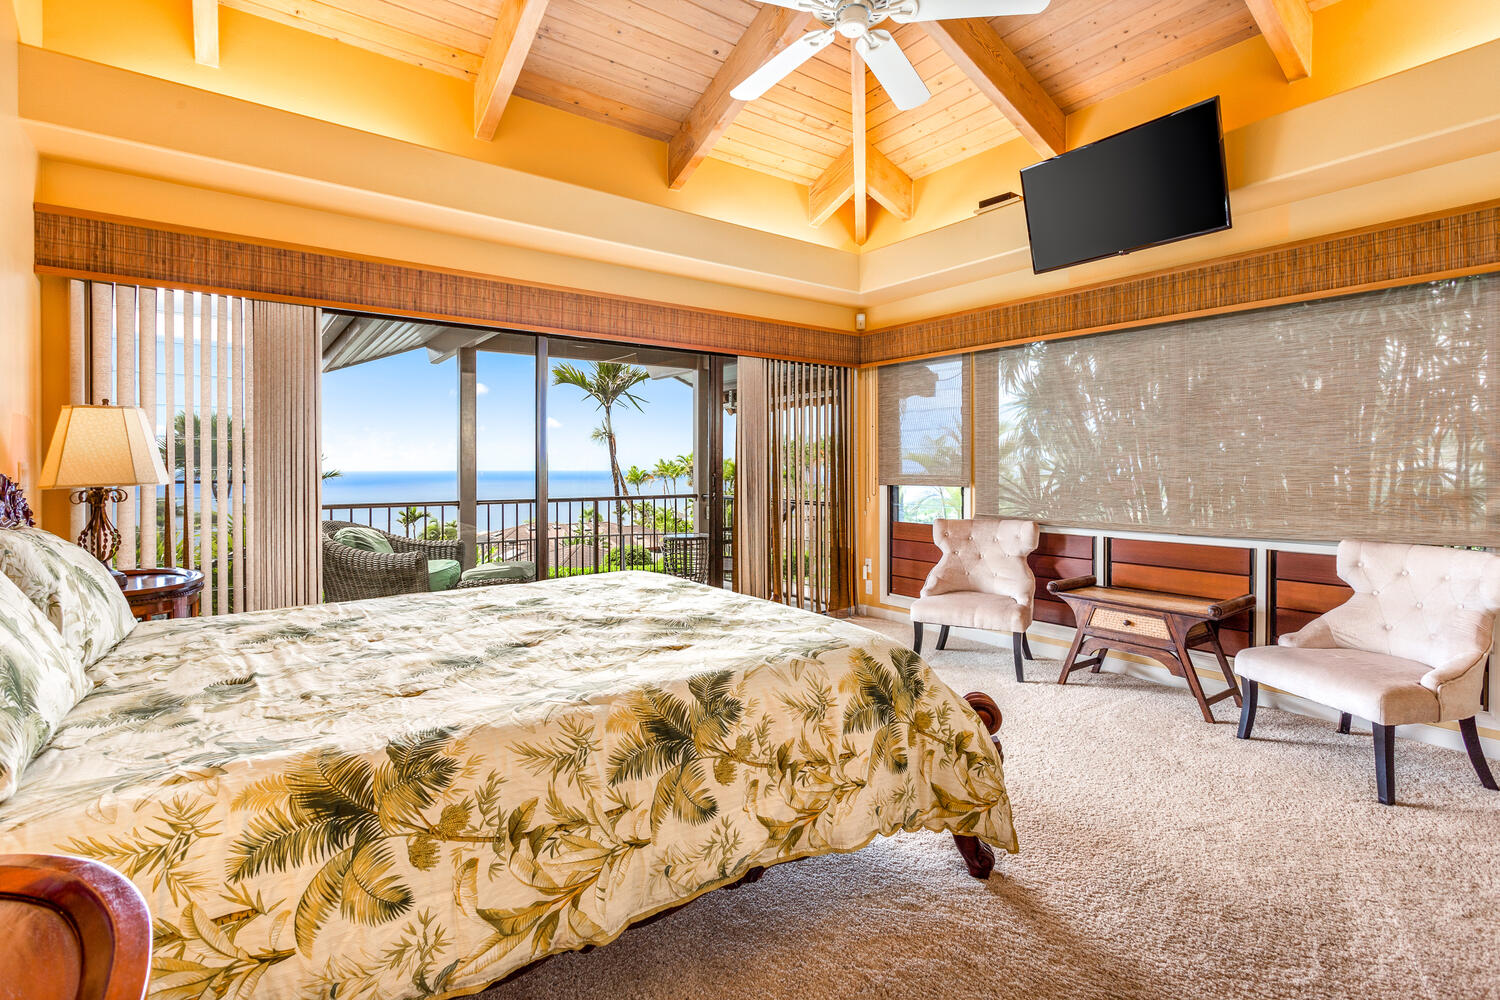 The primary bedroom has high wood ceilings and more ocean views.